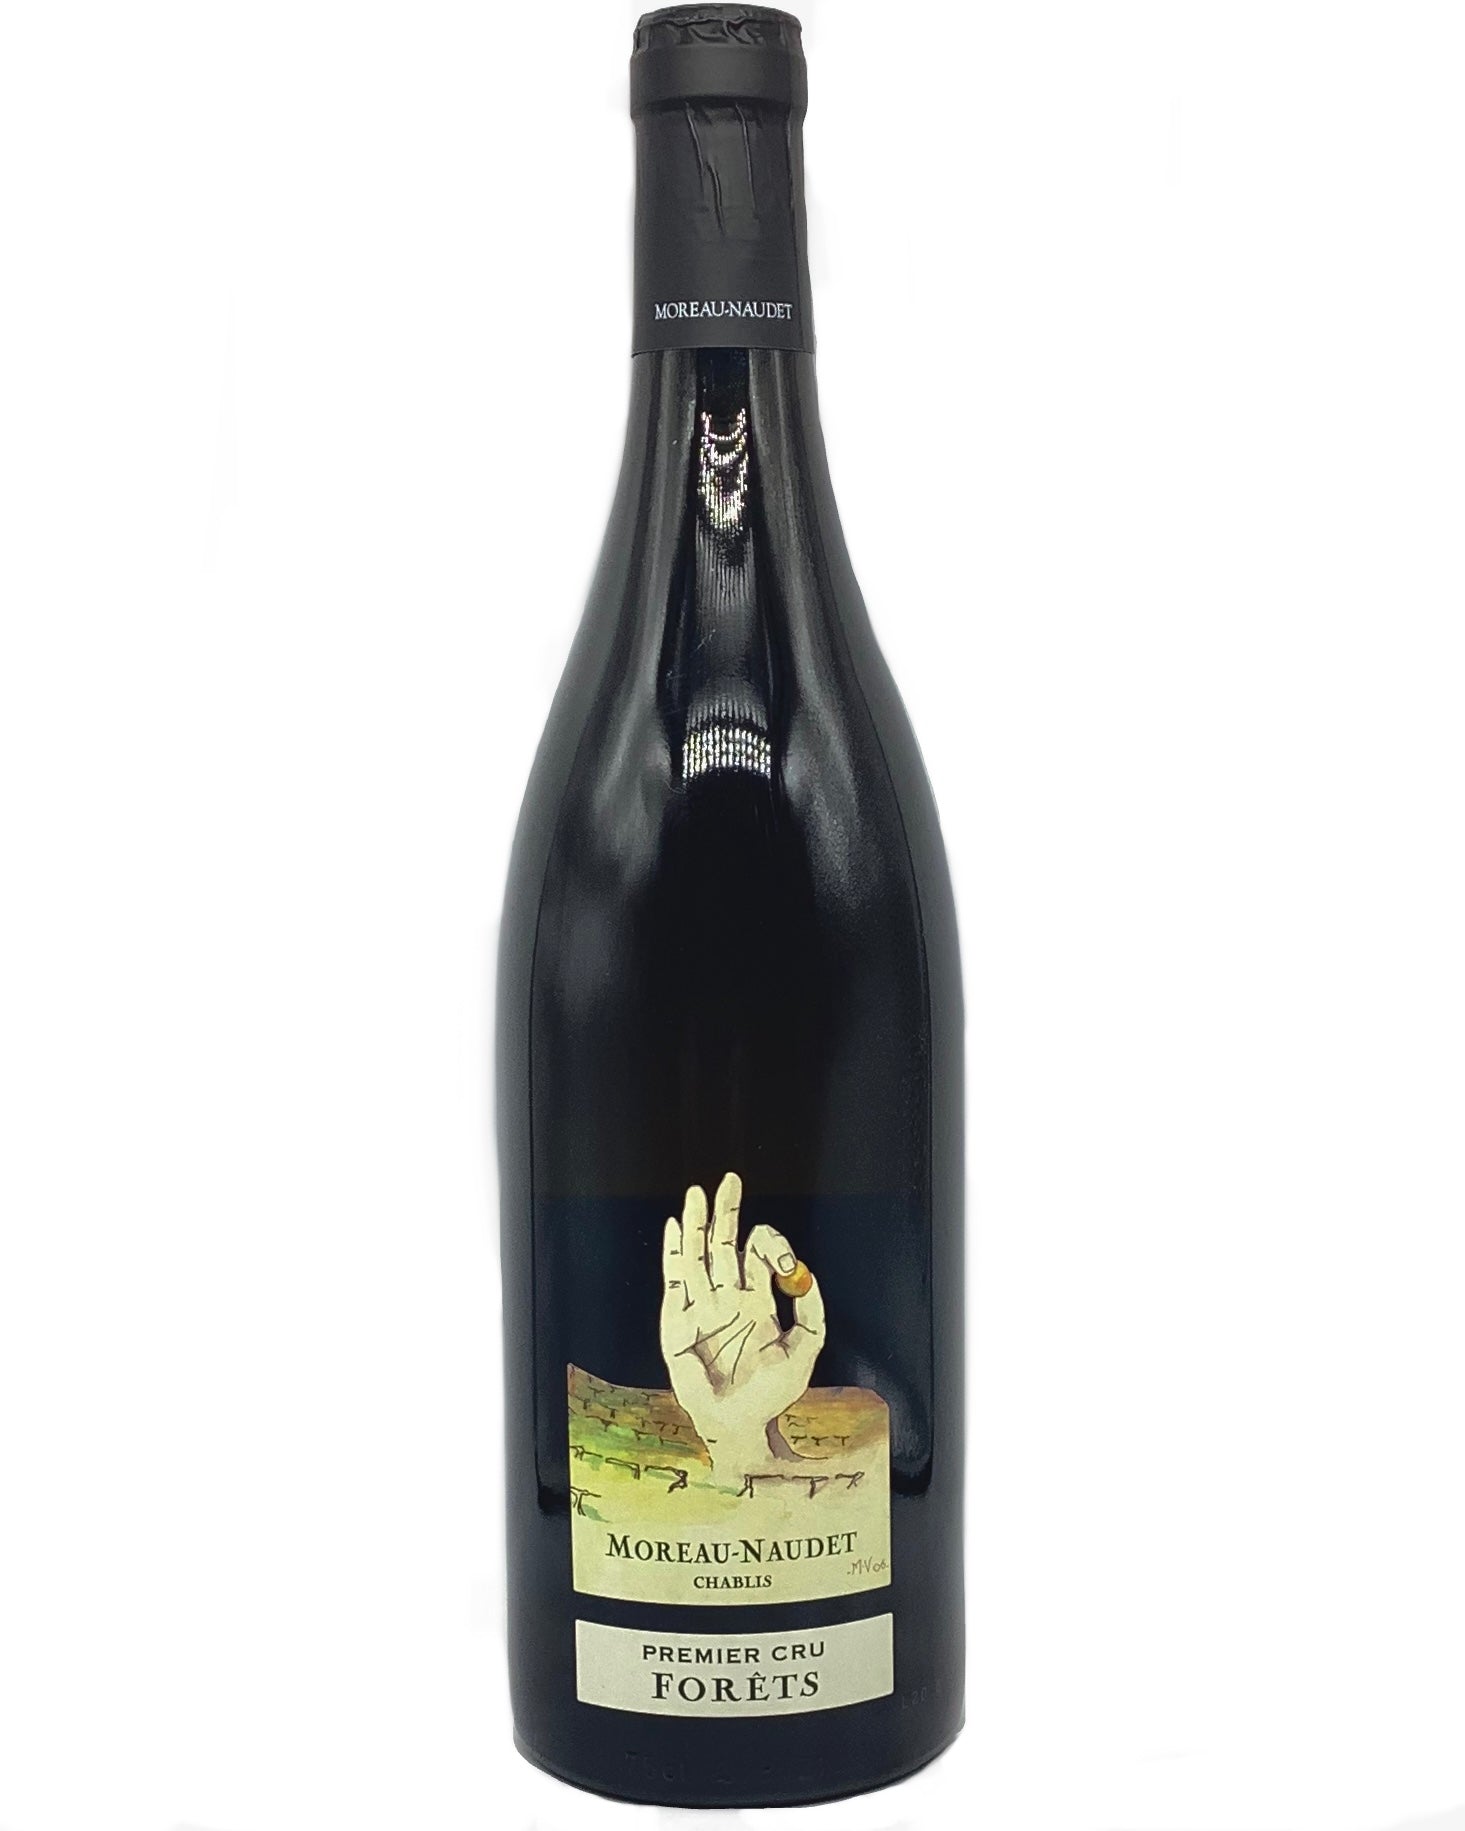 Domaine Moreau-Naudet, Chardonnay, Chablis 1er Cru Forets, Burgundy, France 2020